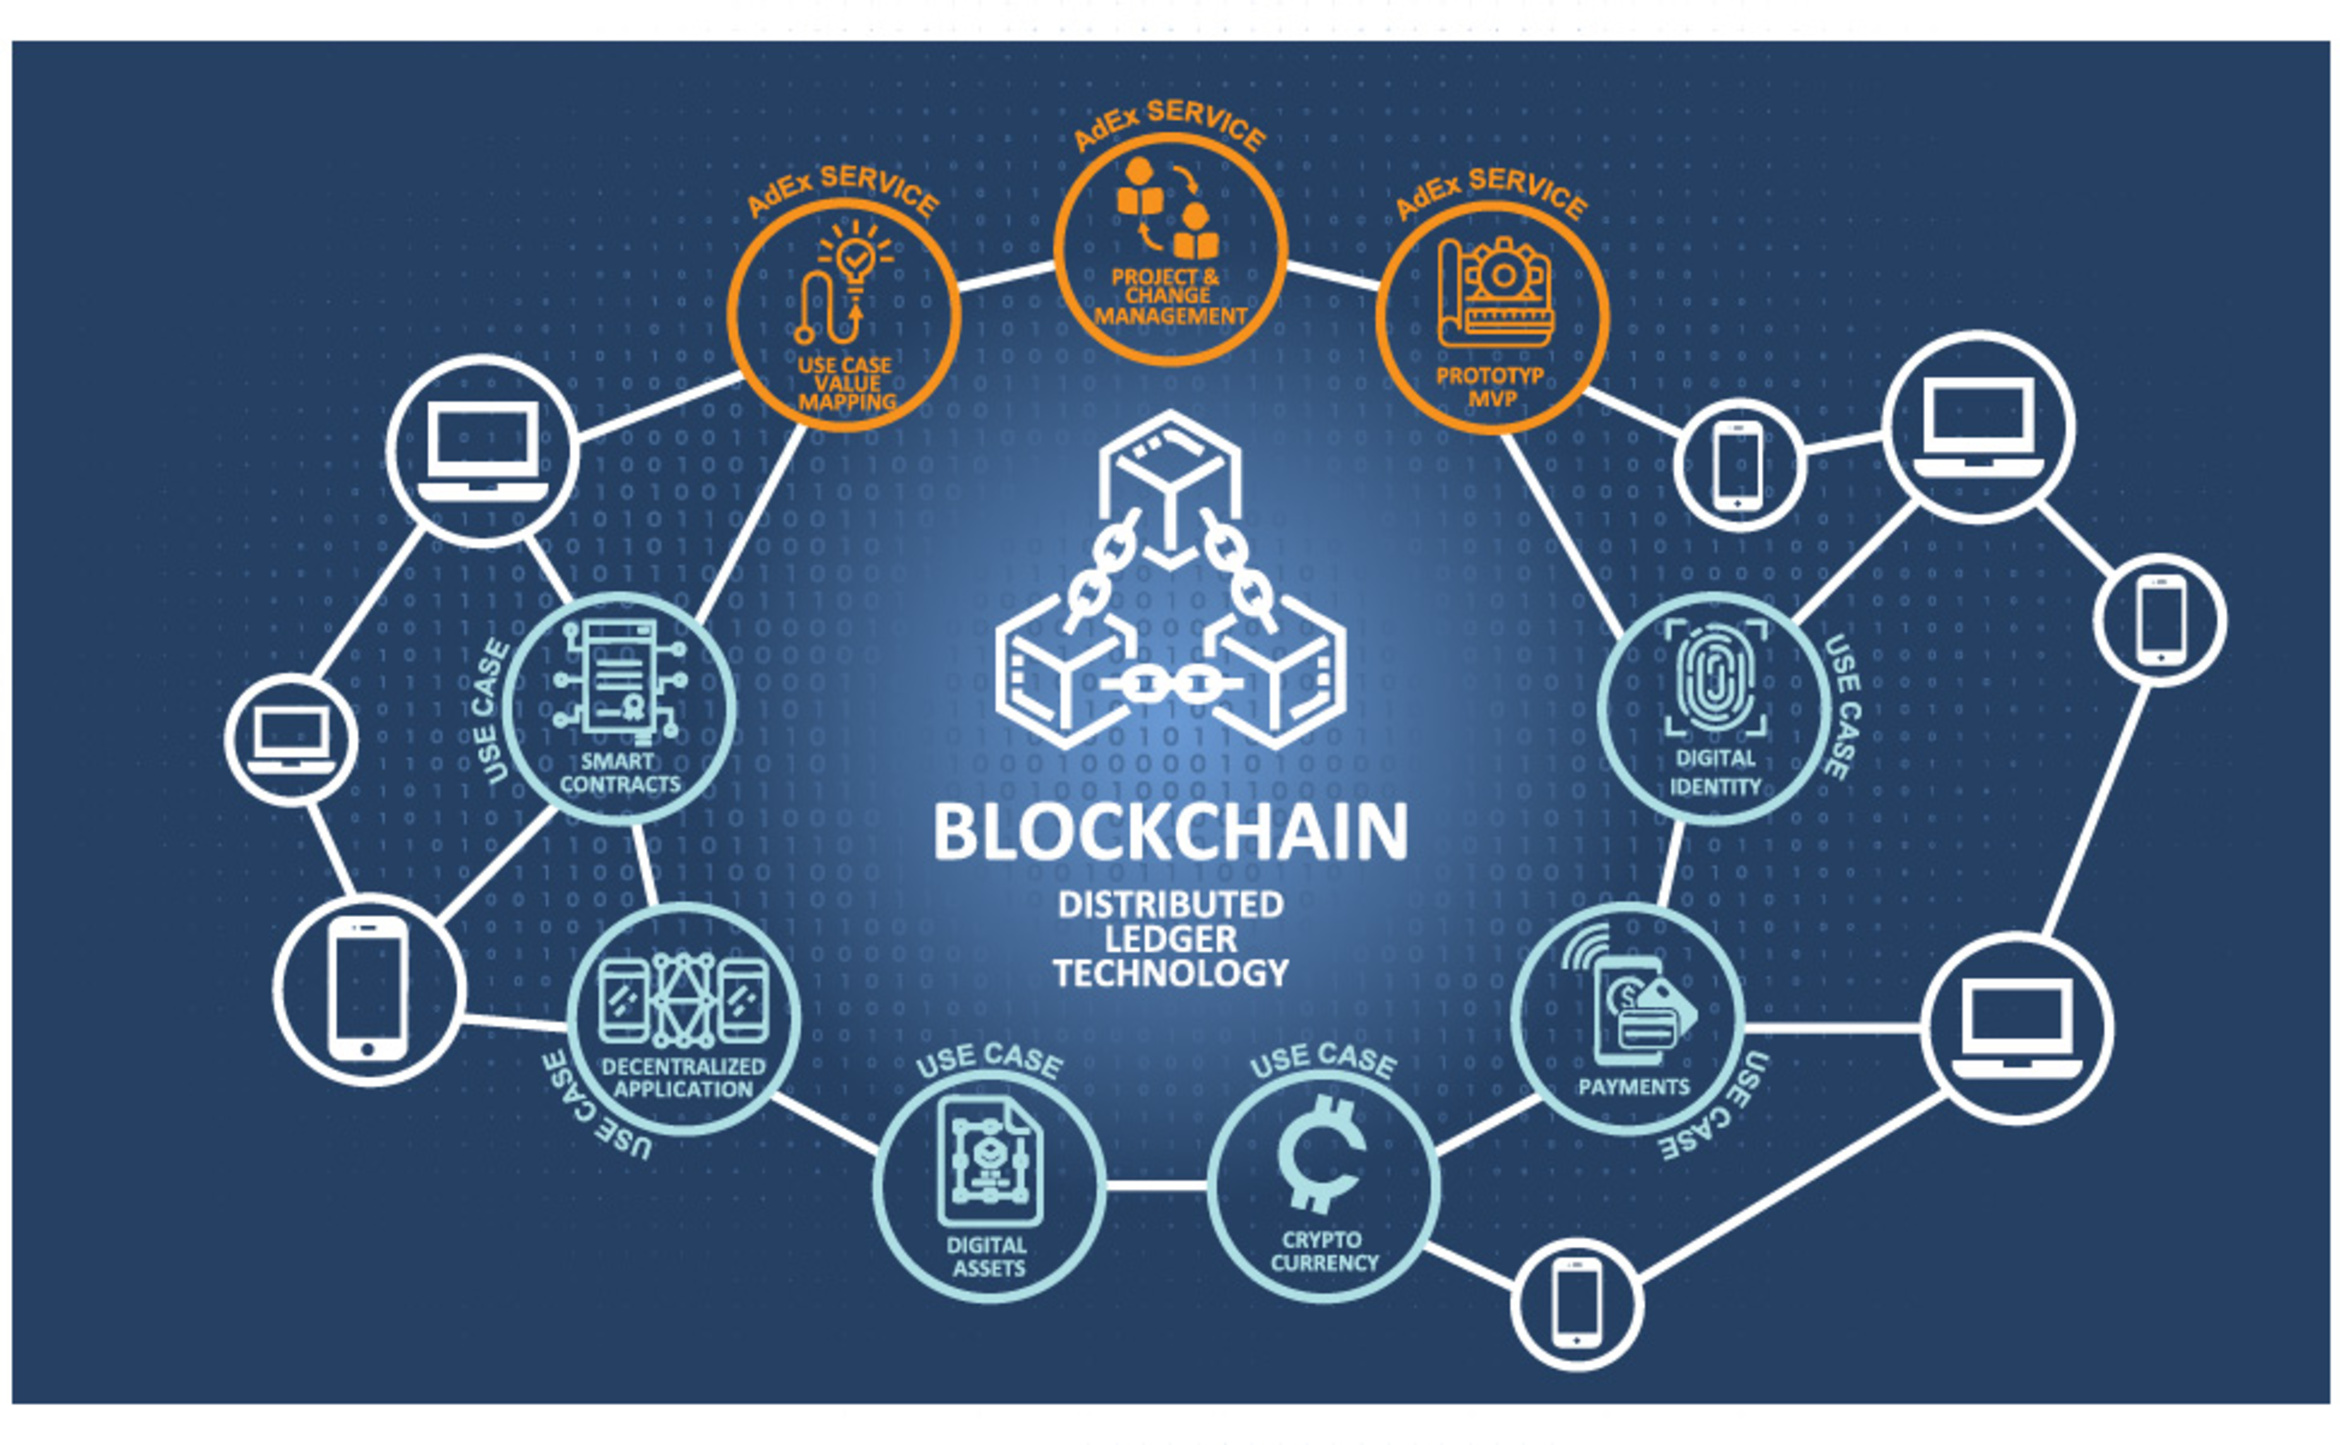 blockchain based technologies